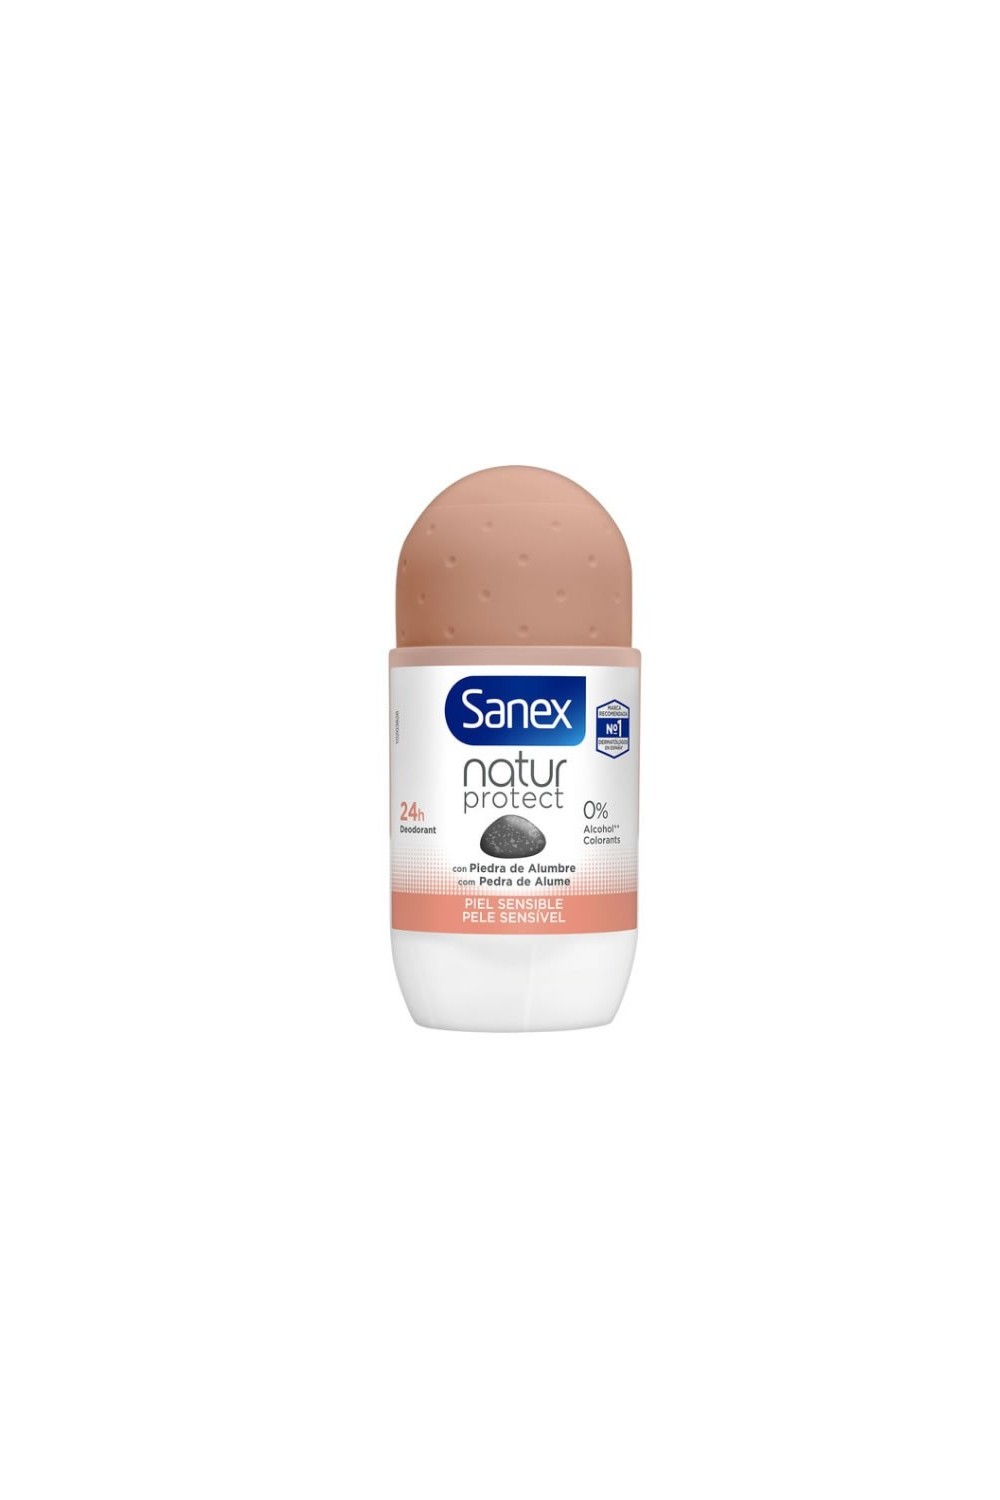 Sanex Deodorant Natur Protect Sensitive Skin 24h 0% Alcohol 50ml